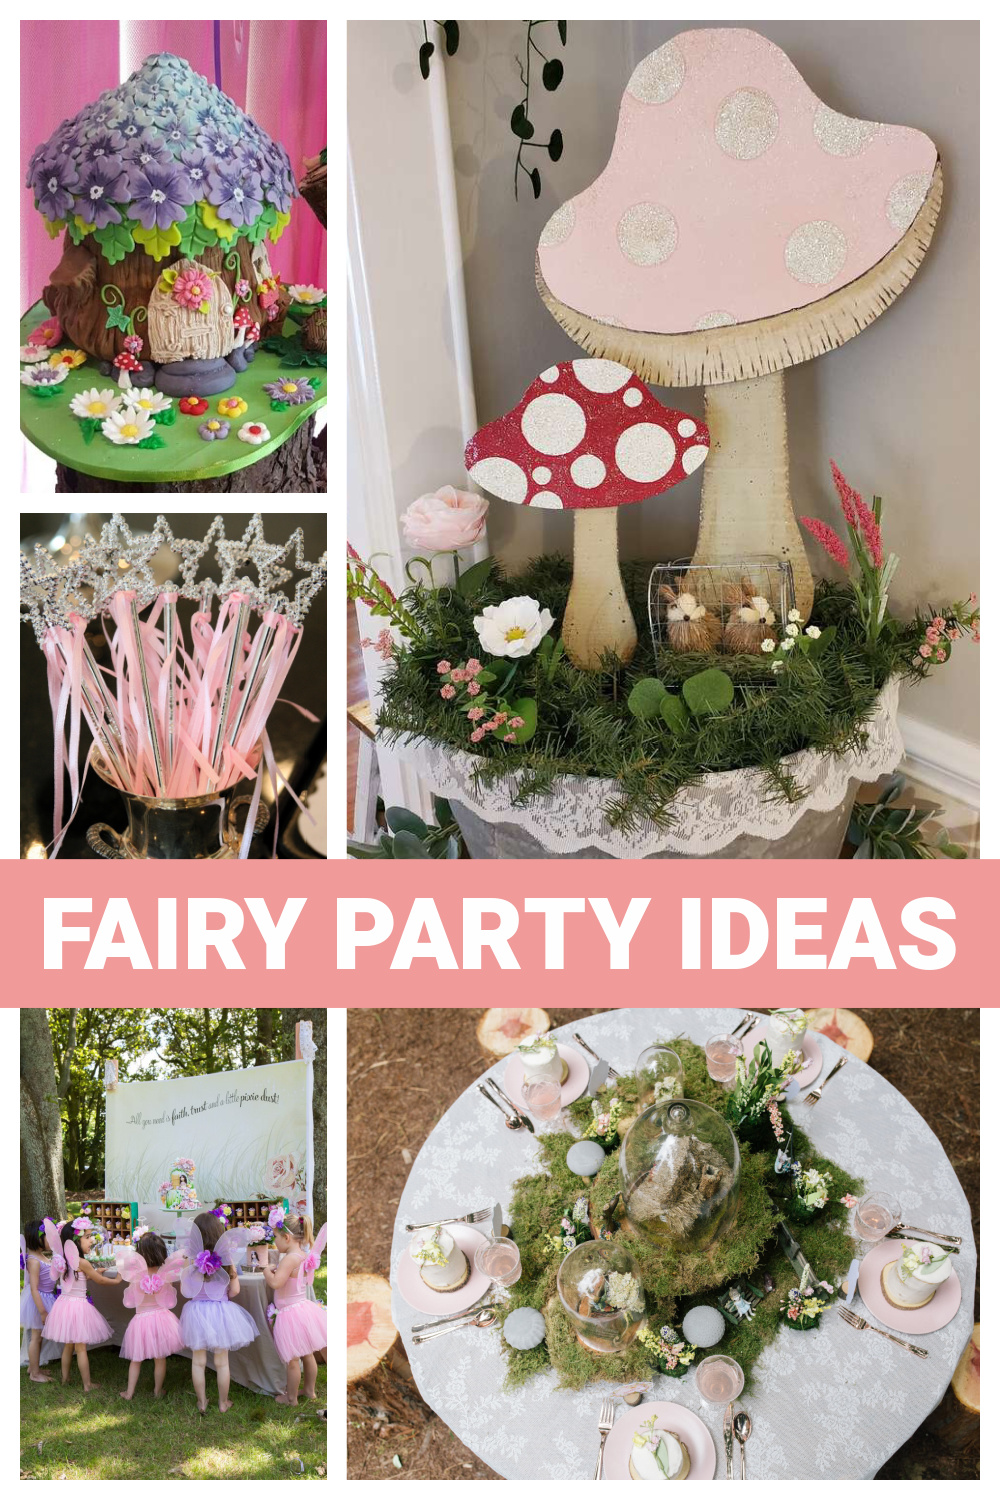 Fairy birthday party ideas for girls - A Pretty Celebration